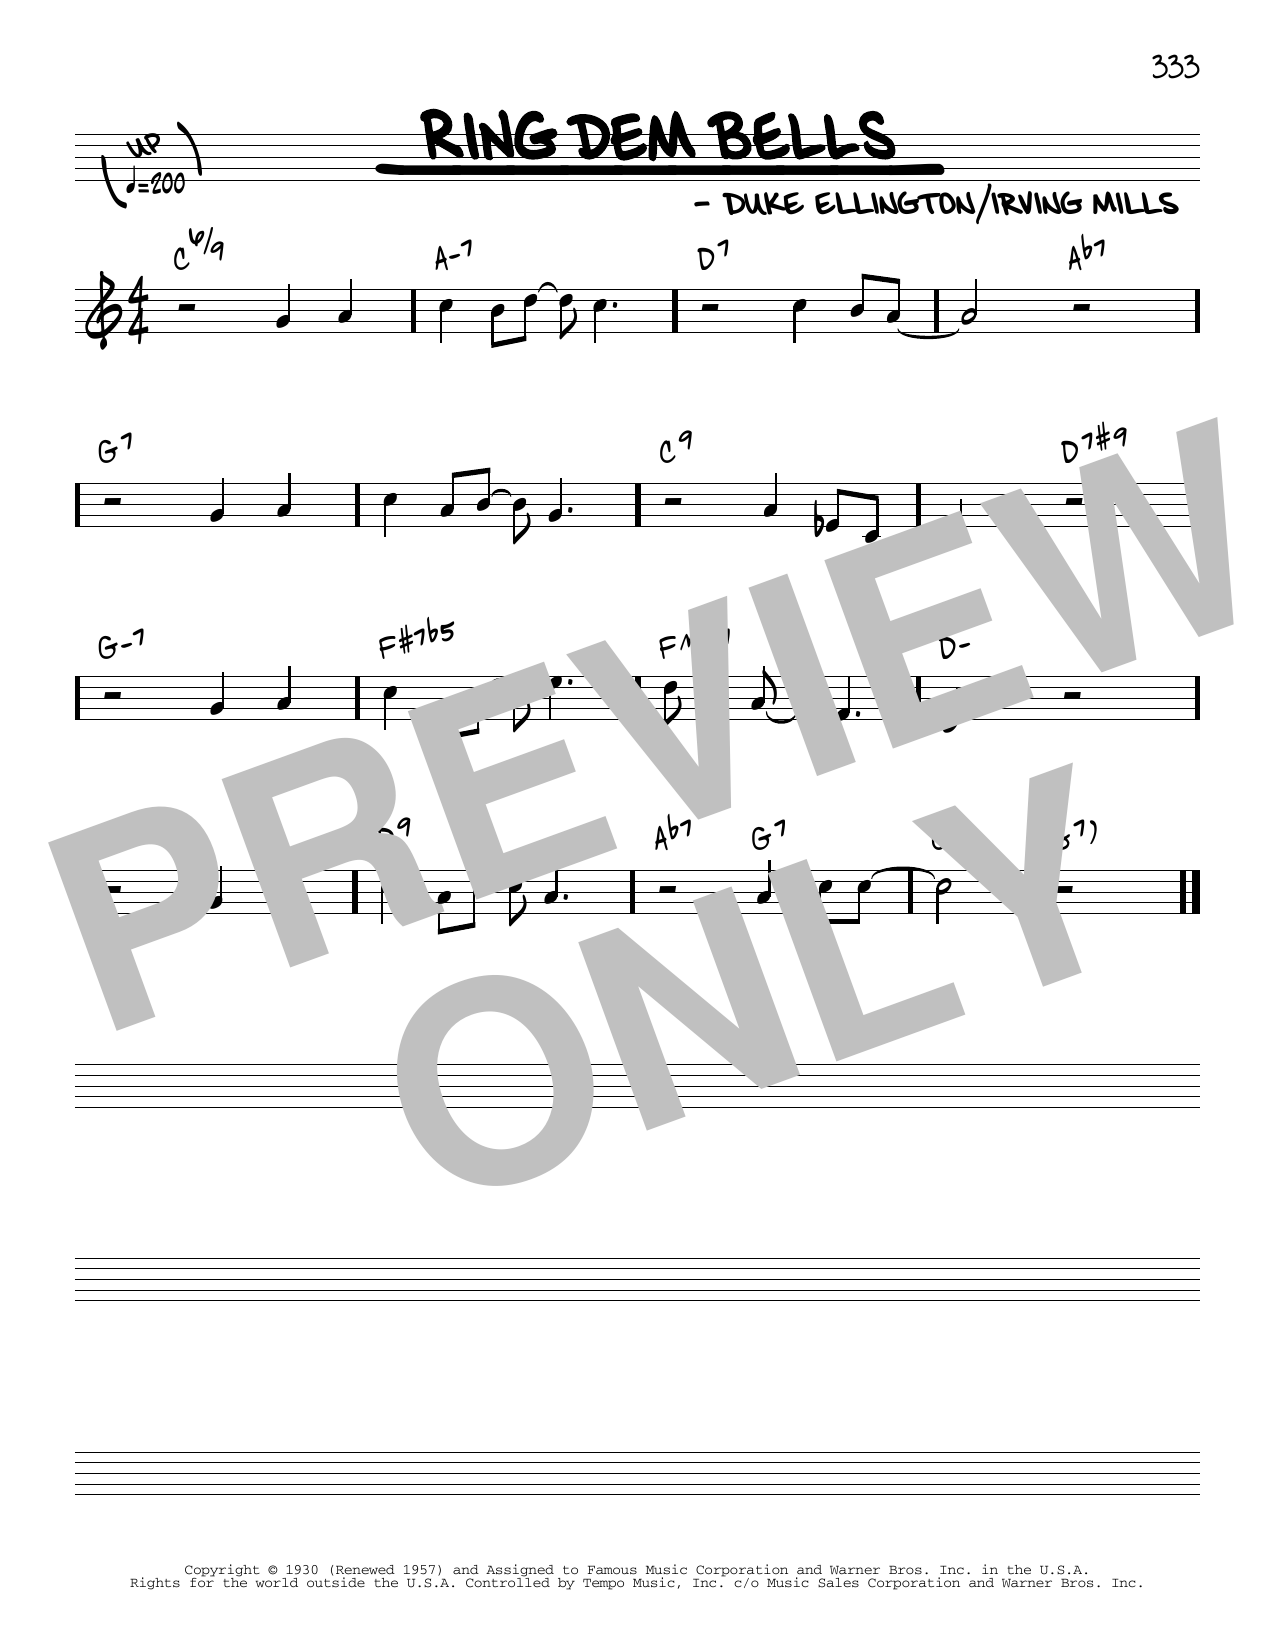 Duke Ellington Ring Dem Bells [Reharmonized version] (arr. Jack Grassel) Sheet Music Notes & Chords for Real Book – Melody & Chords - Download or Print PDF